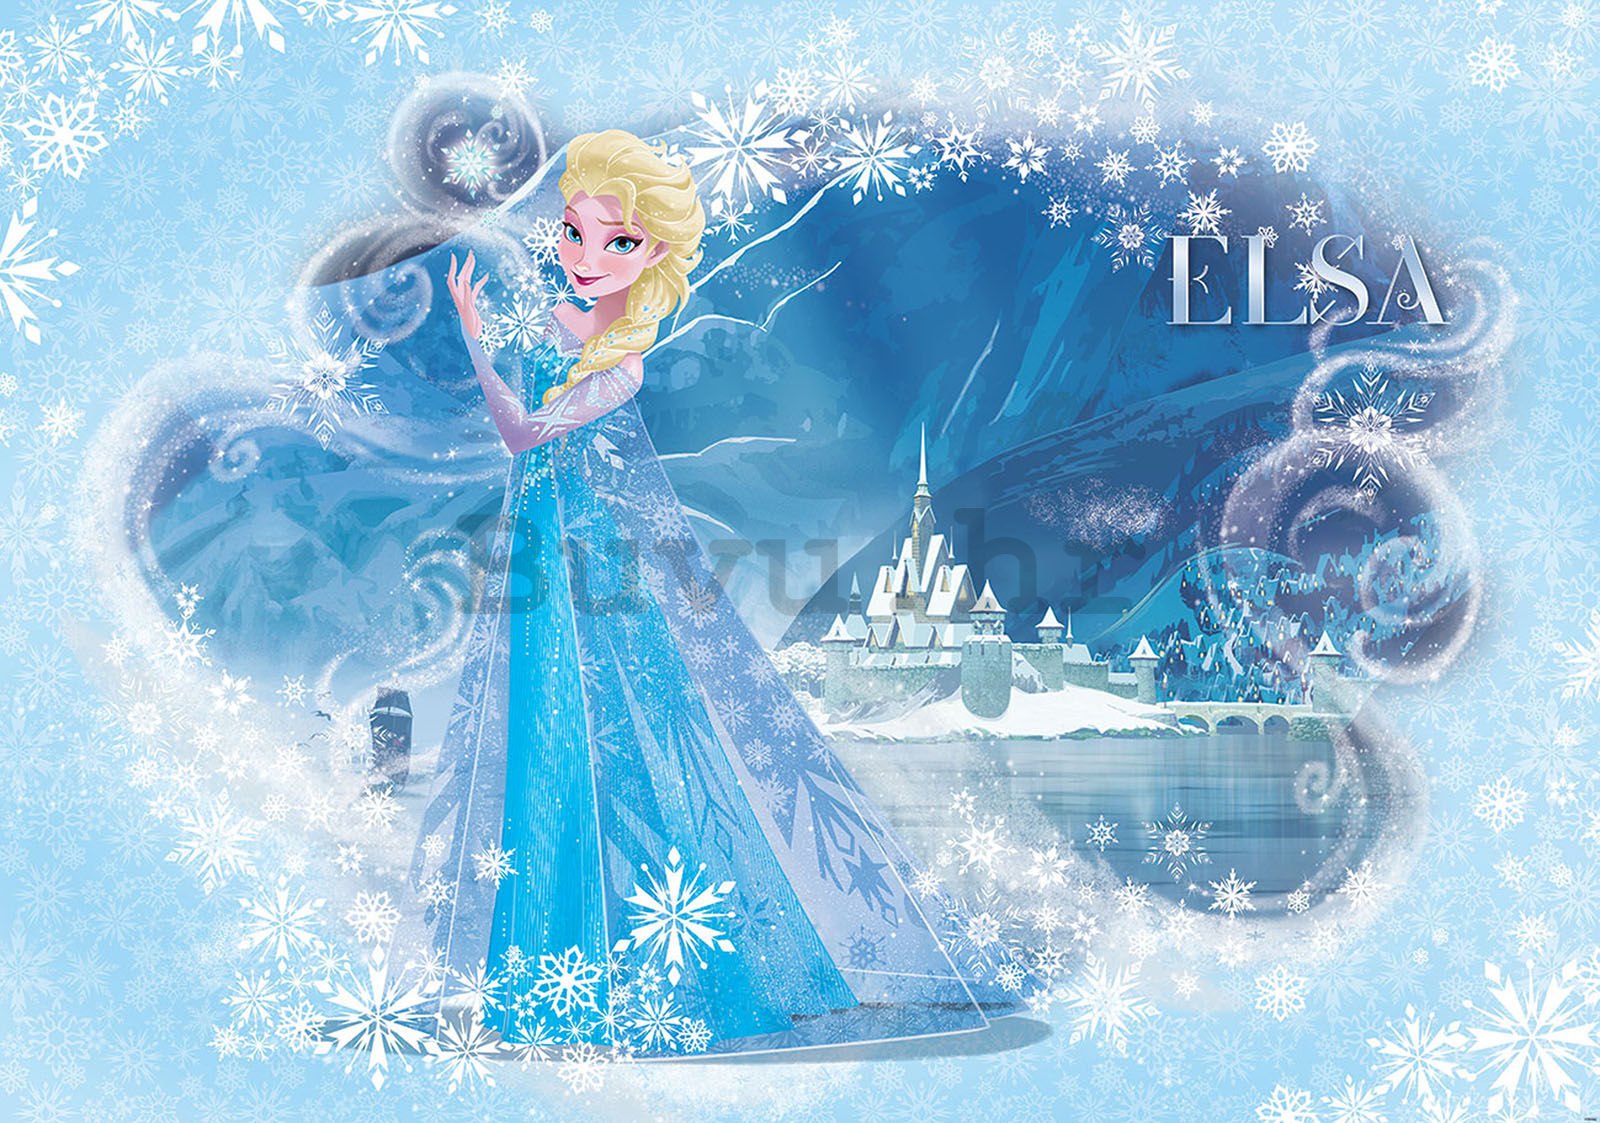 Vlies foto tapeta: Elsa II (Frozen) - 208x146 cm